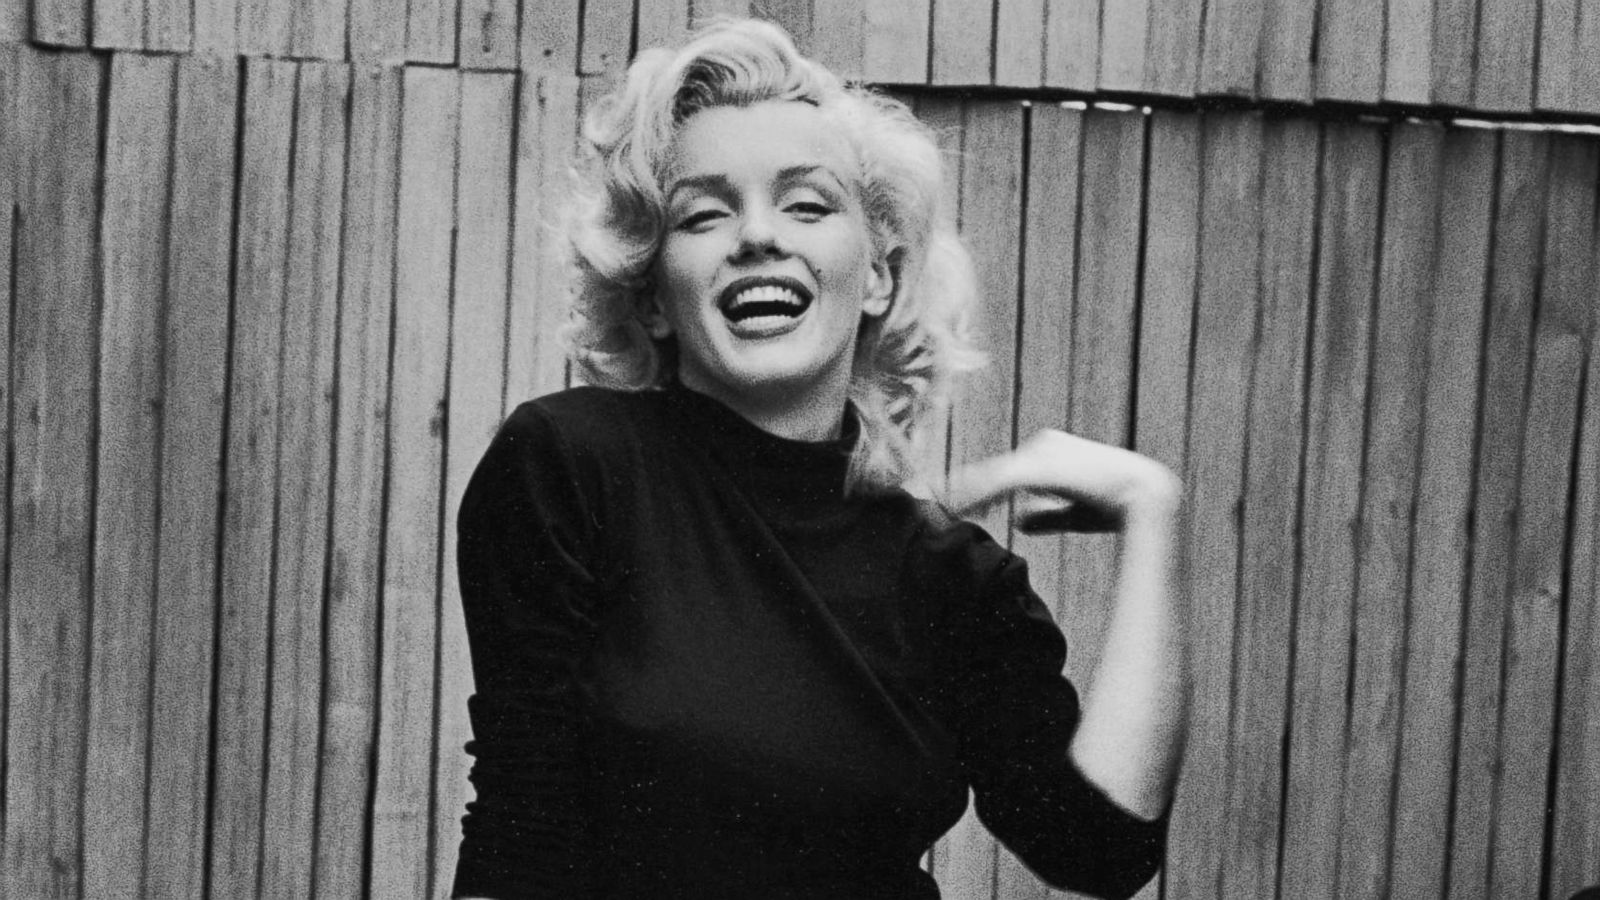 Original Marilyn Monroe Hd Photos wallpaper quotes